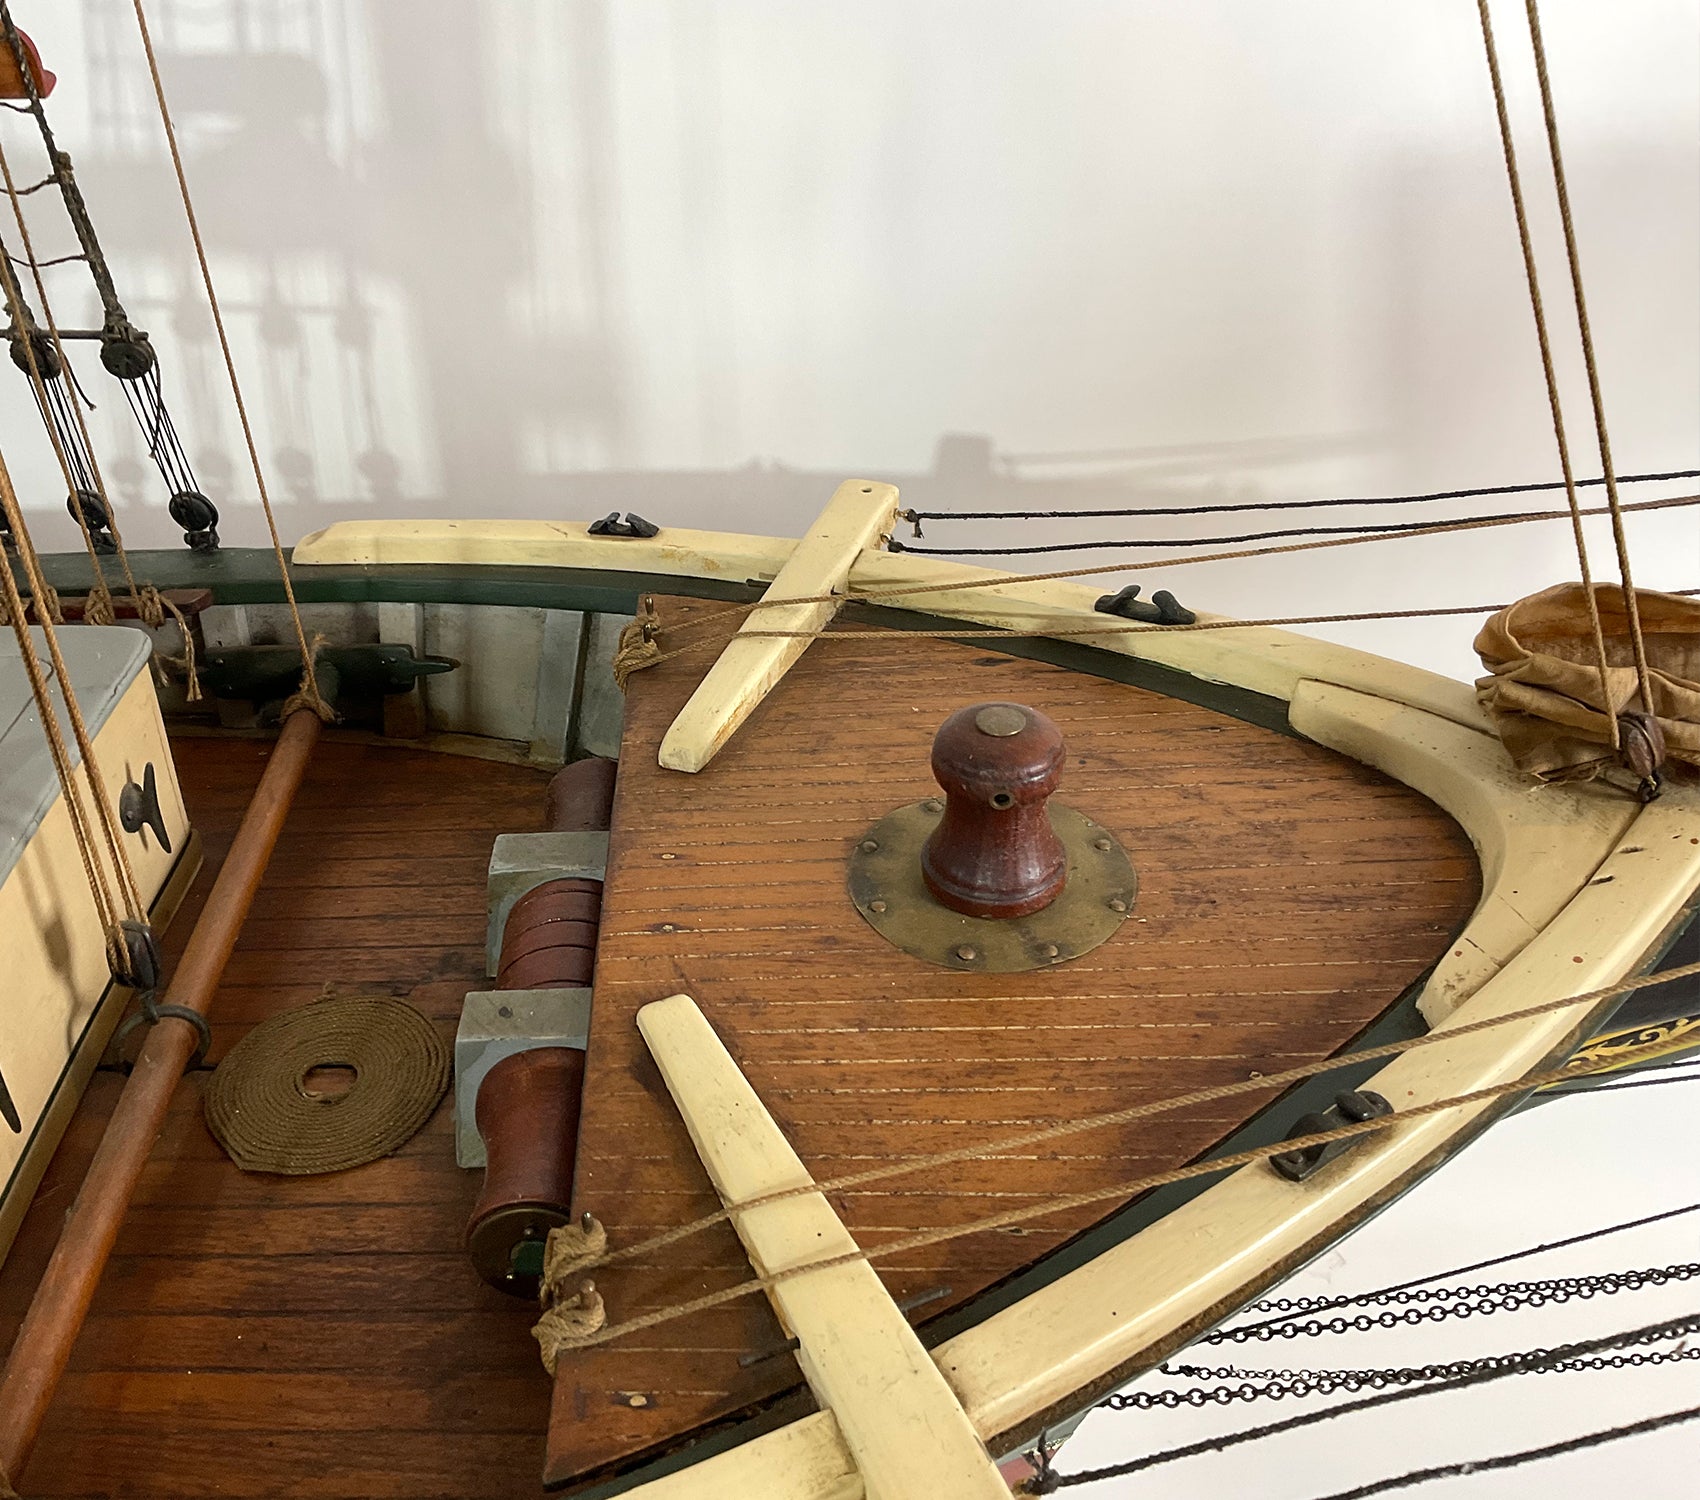 Henry Huddleston Rogers Collection Ship Model - Lannan Gallery